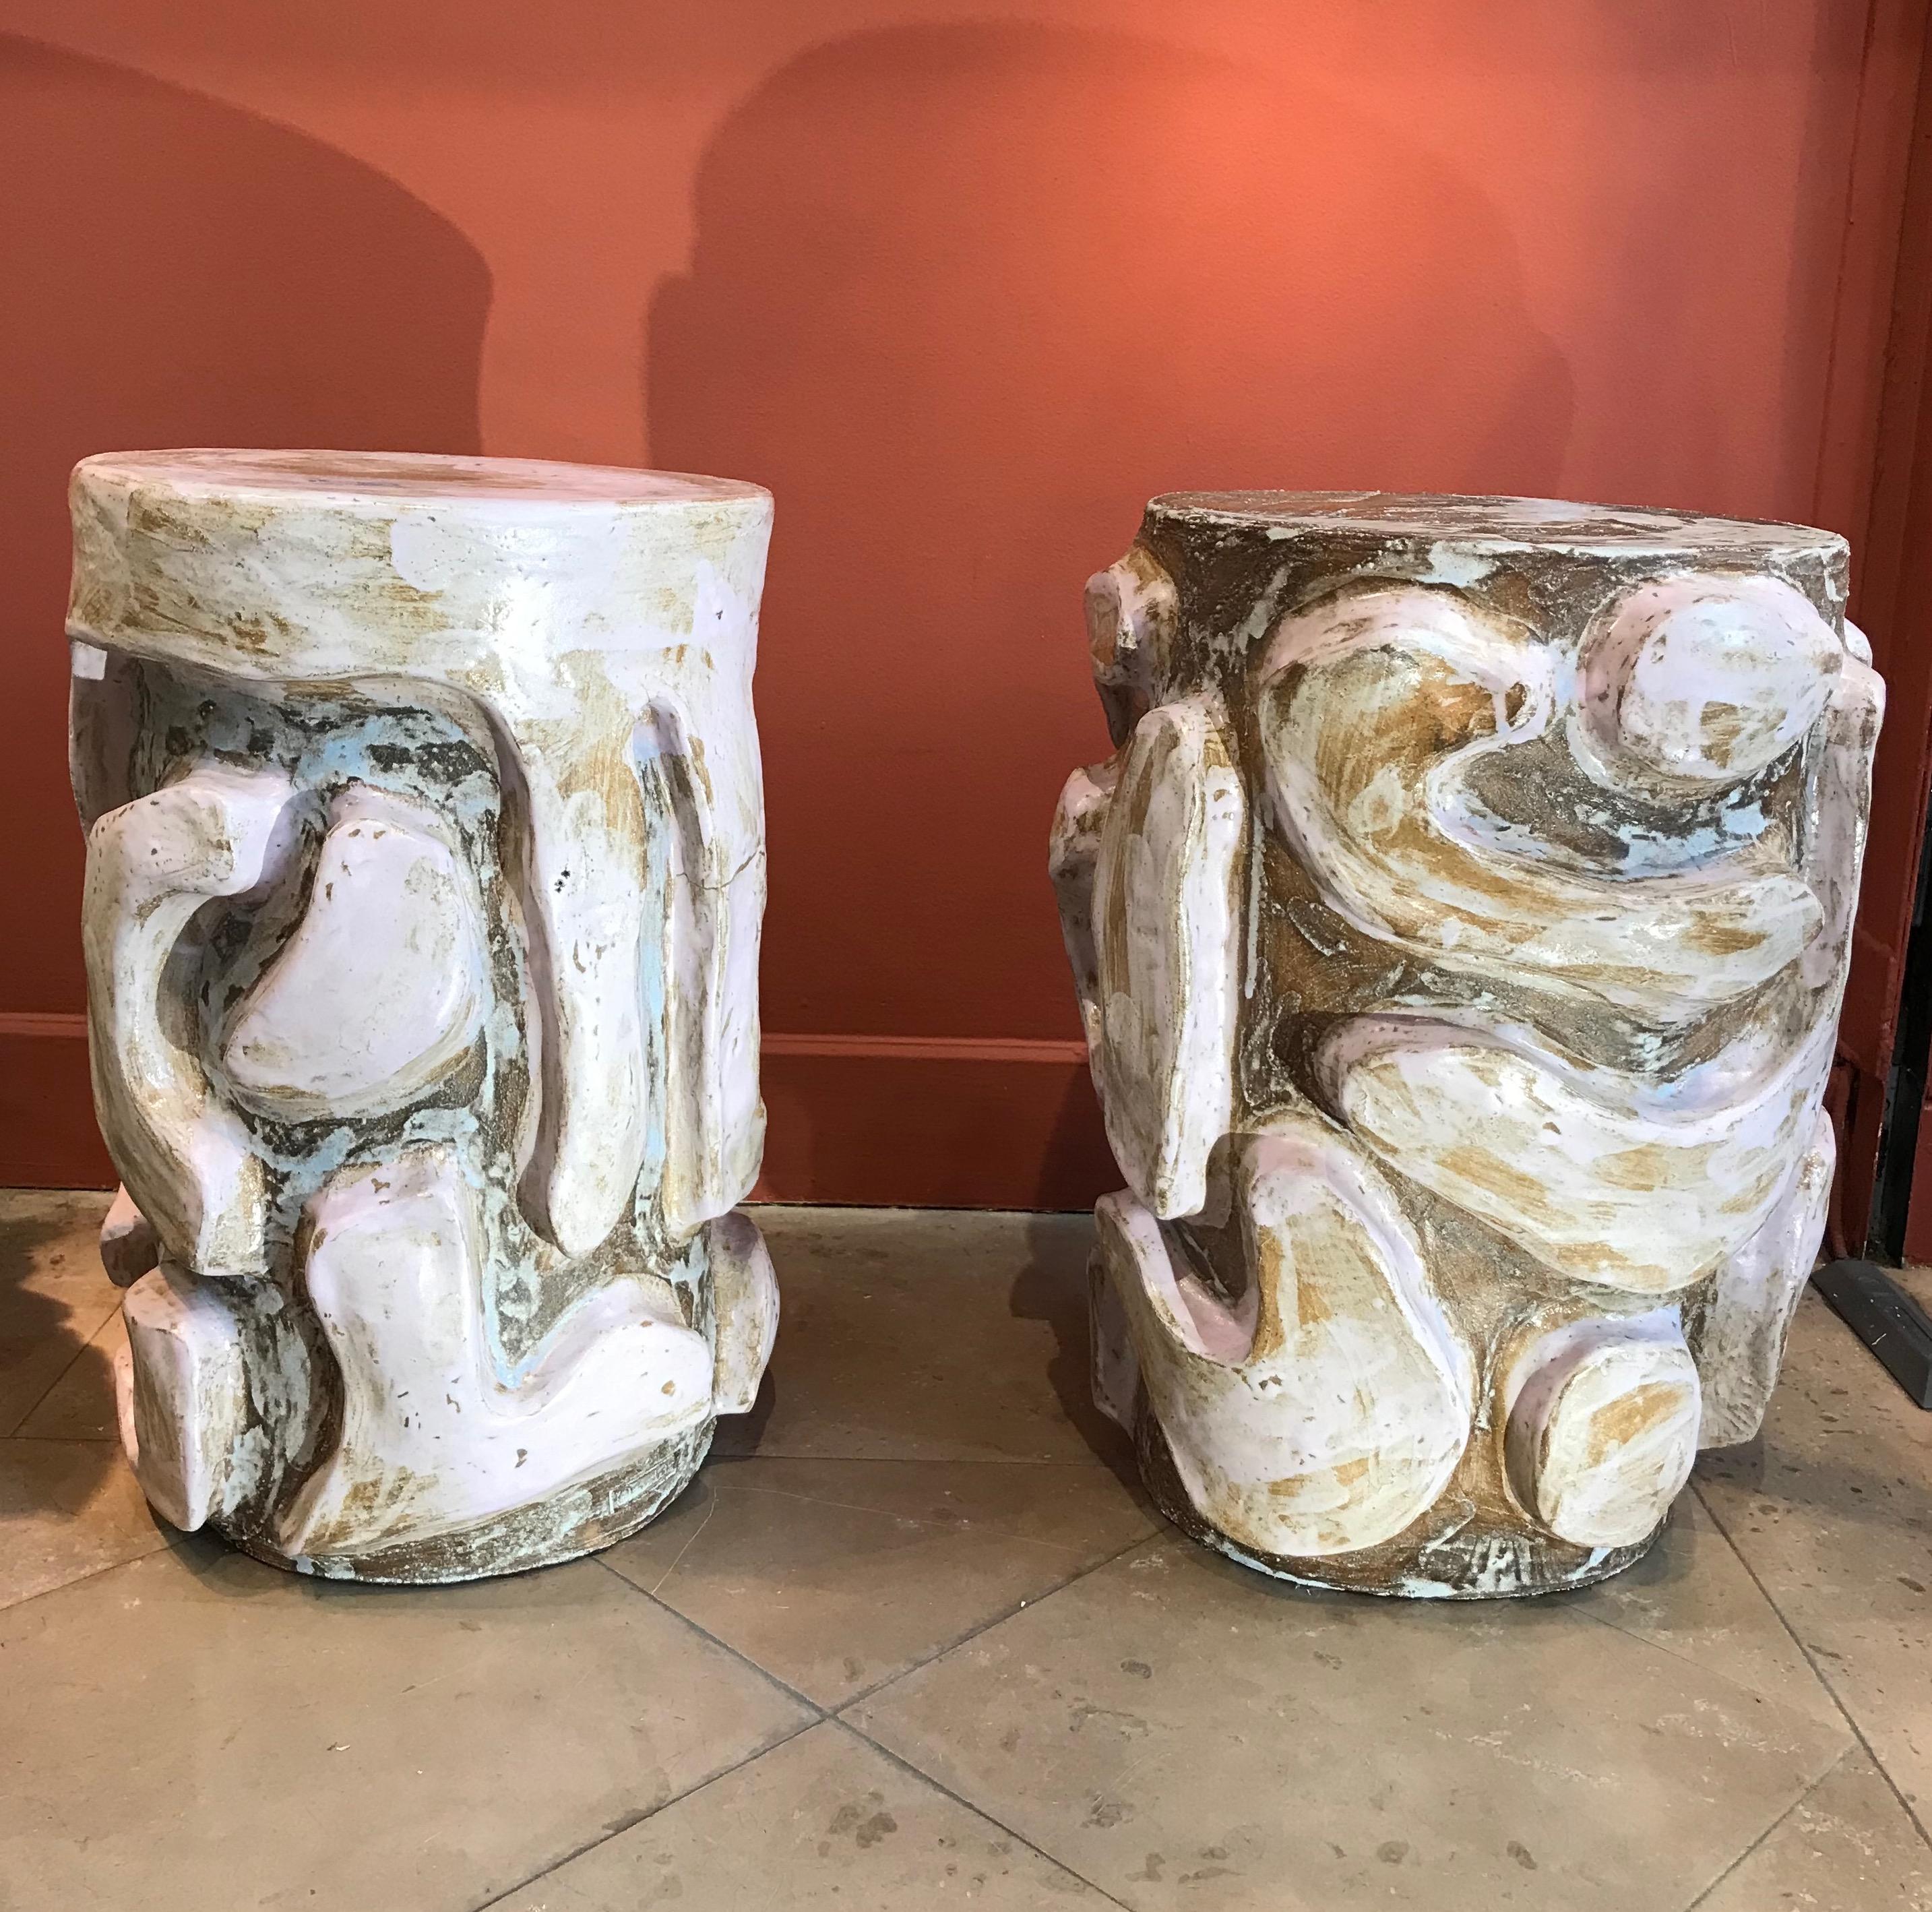 Sandstone Alice Gavalet 2018, 21 St Century, Paris, Pair of Side Tables, Pink